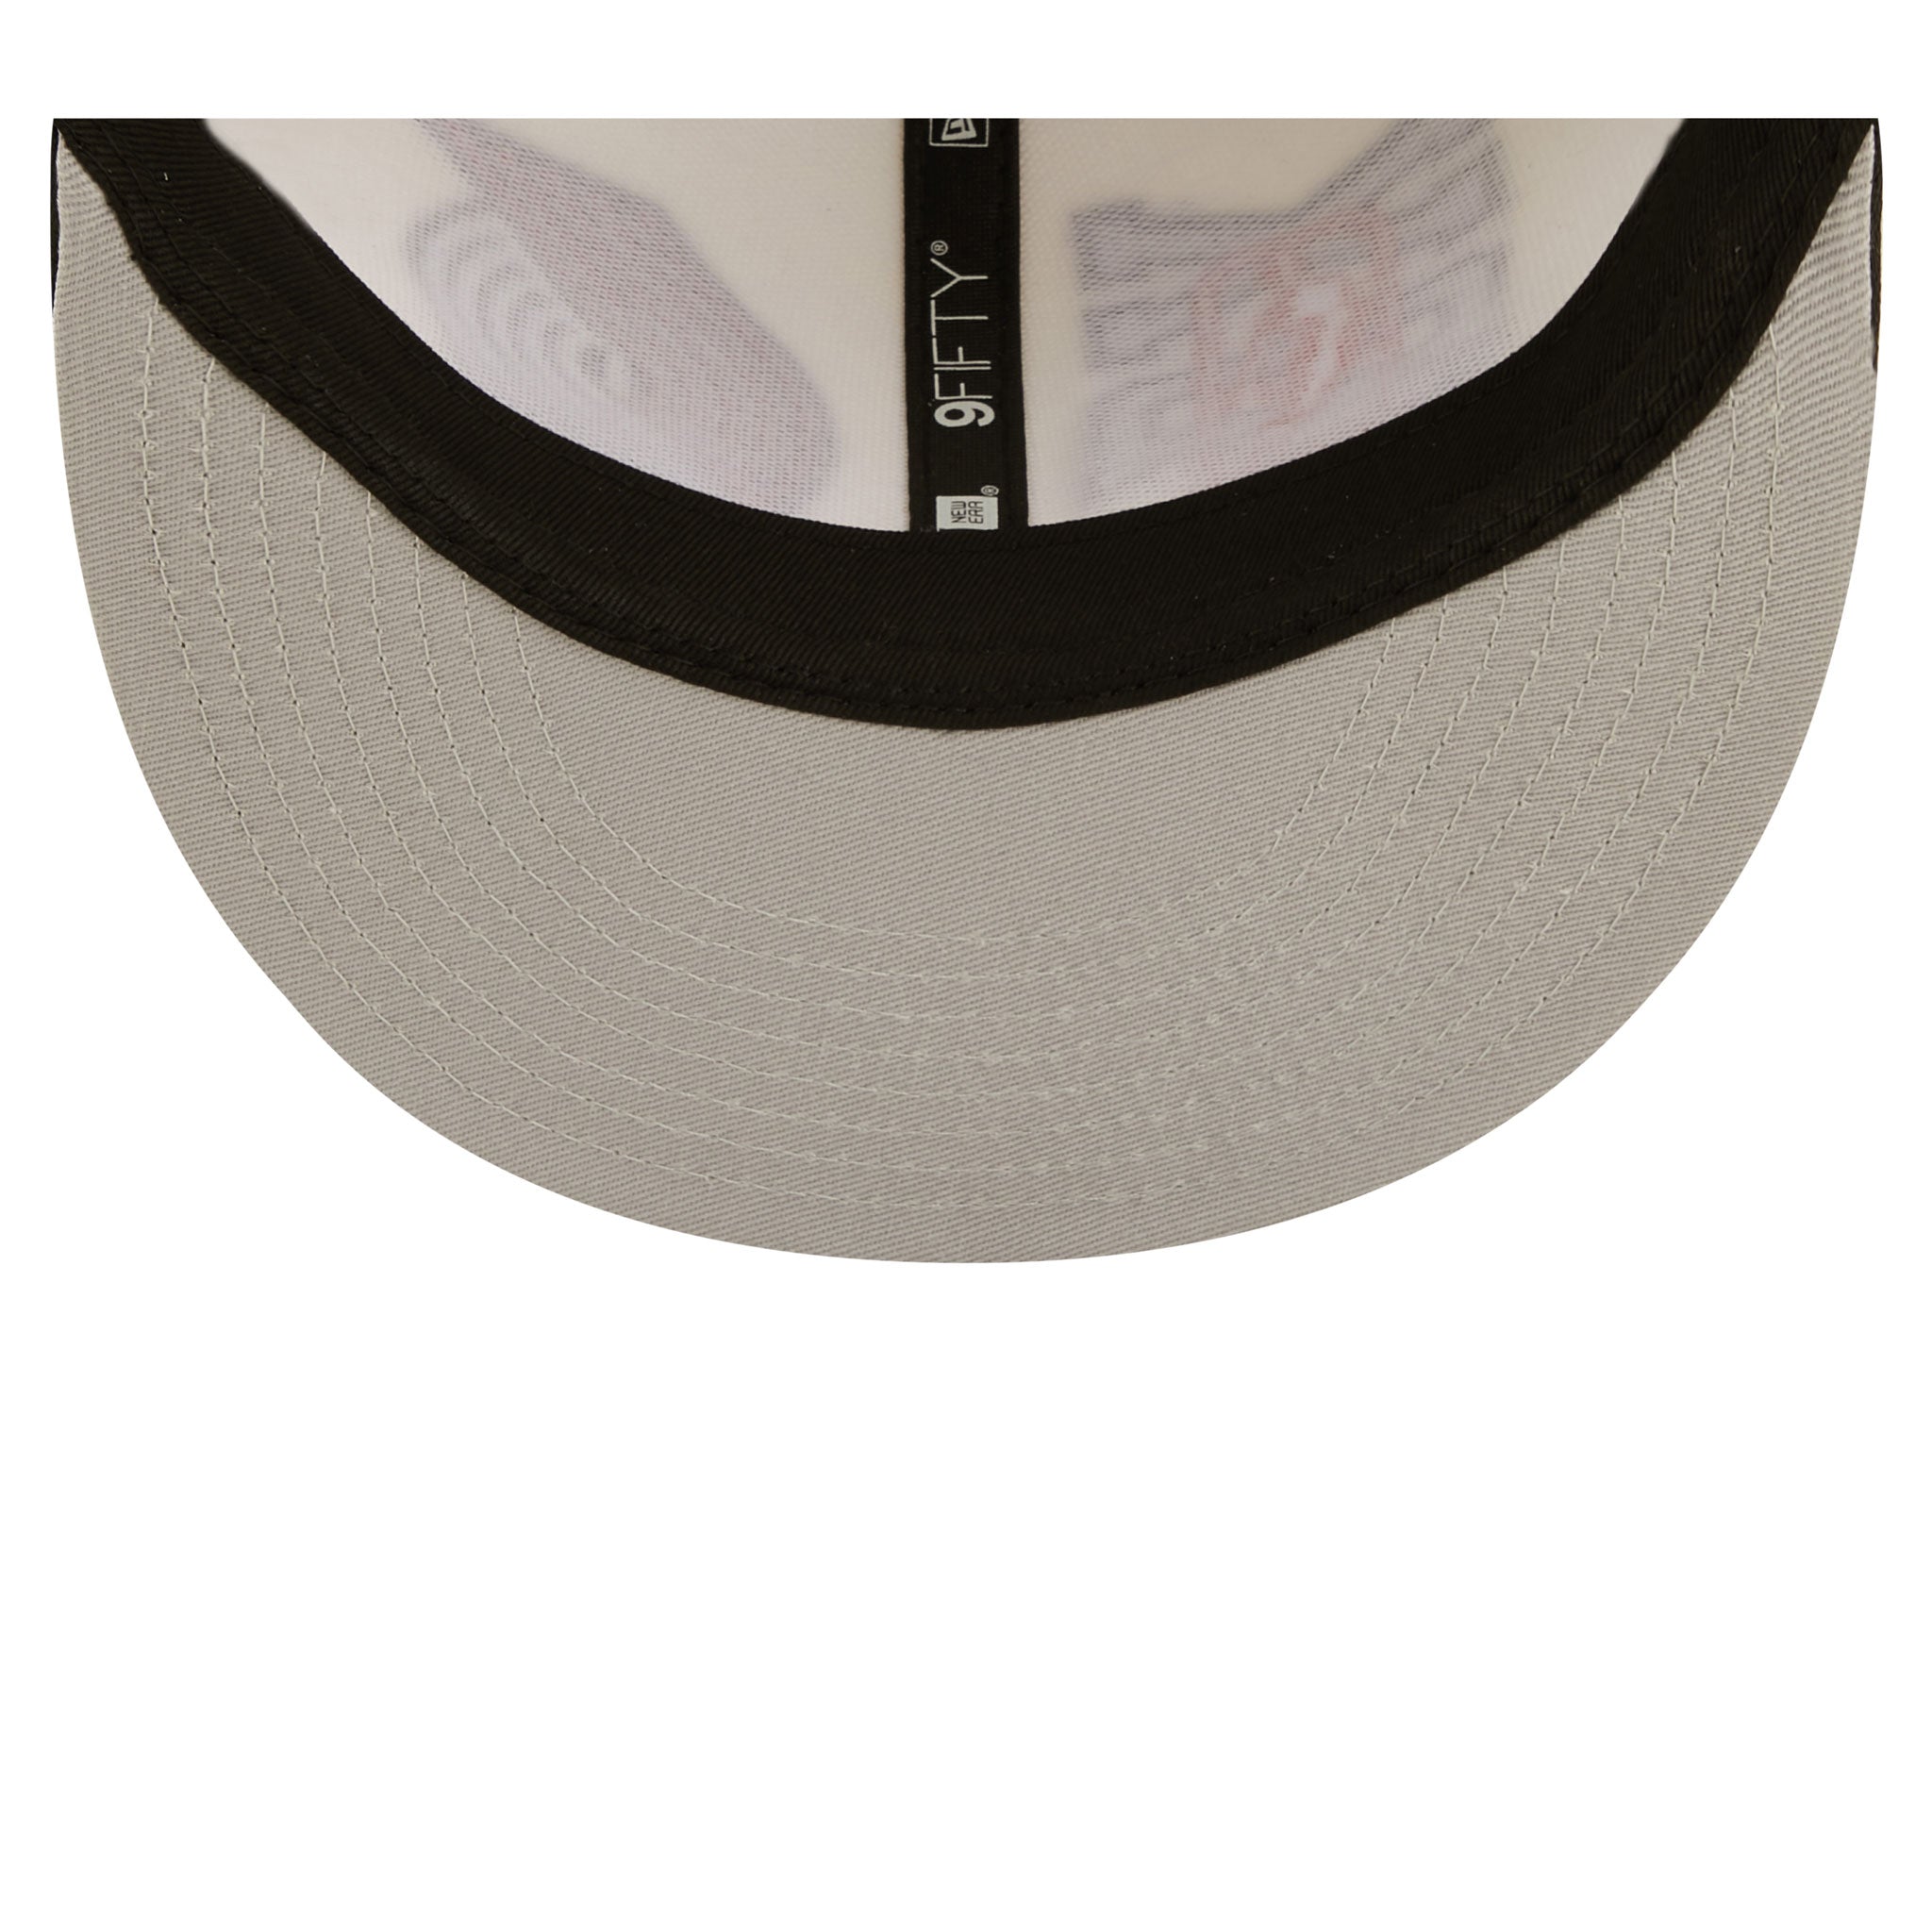 New Era NBA Logo Cream Edition 9Fifty Snapback Hat